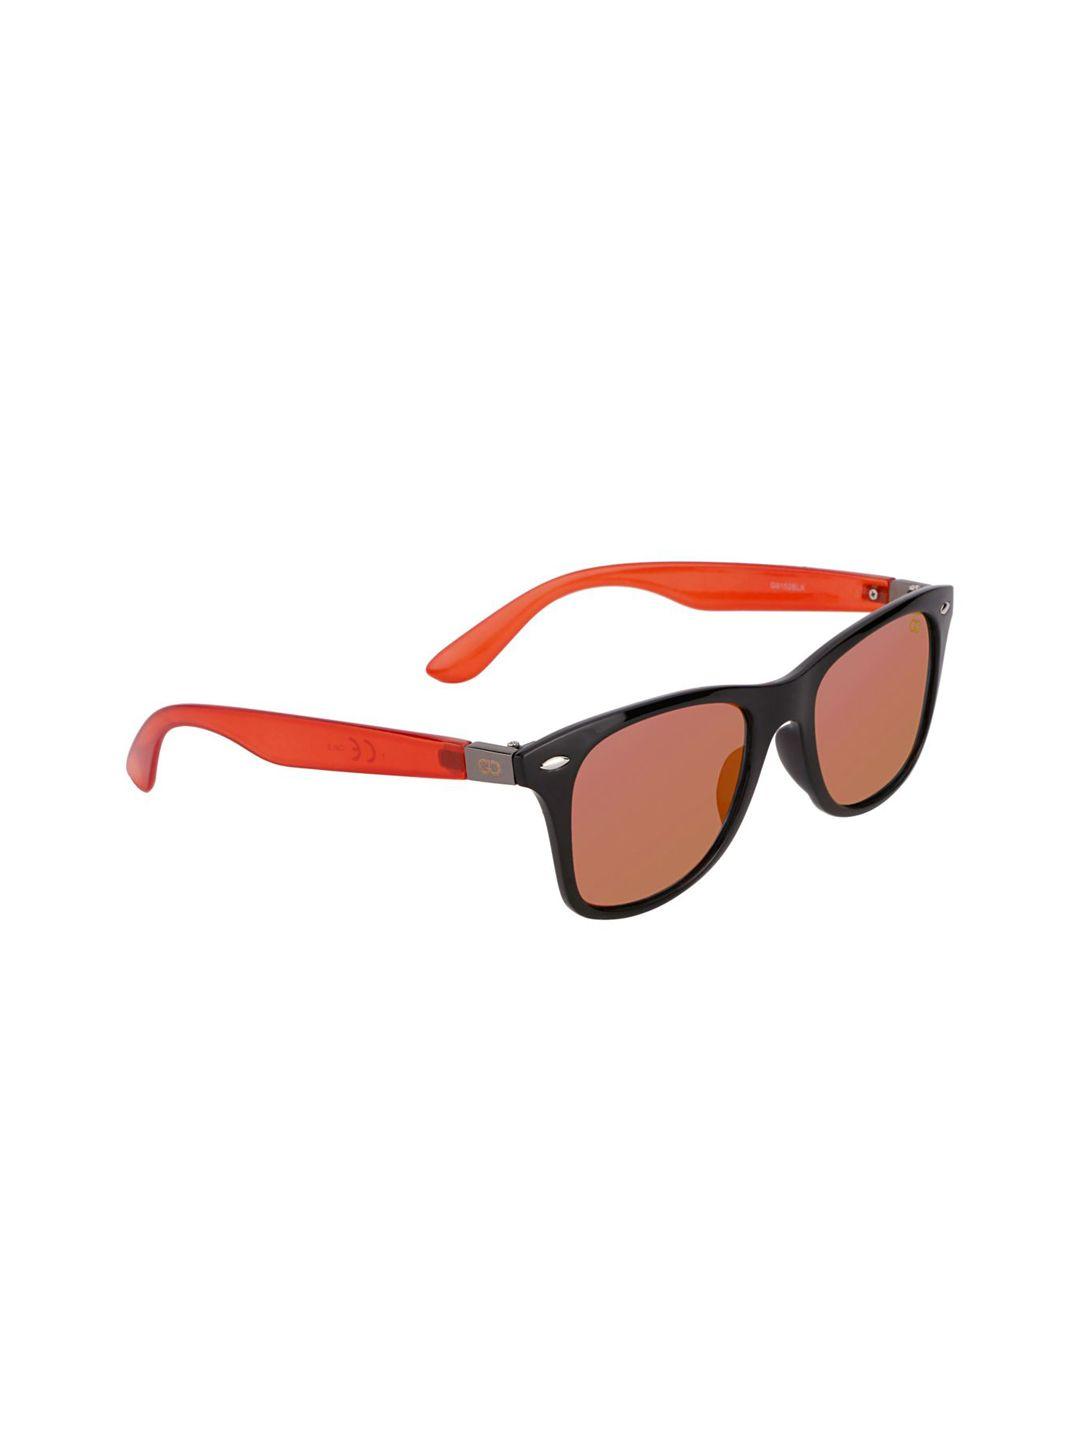 gio collection unisex wayfarer sunglasses g9152blk